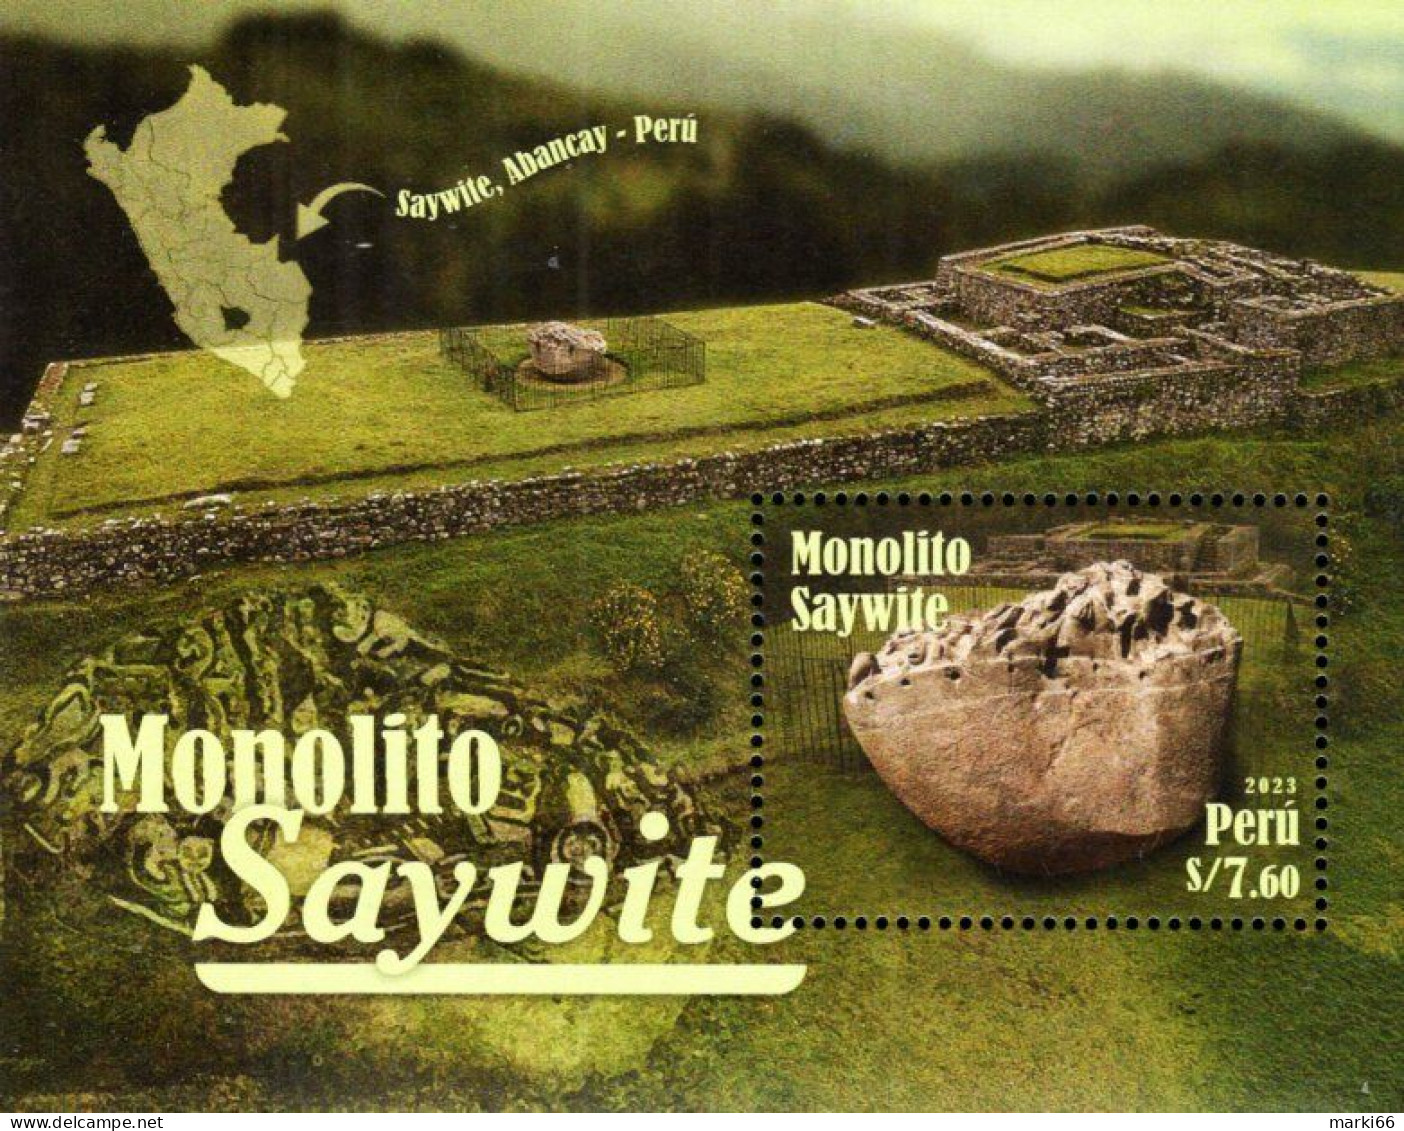 Peru - 2023 - Saywite (Sayhuite) Monolith - Inca Religious Worship Site - Mint Souvenir Sheet - Perú